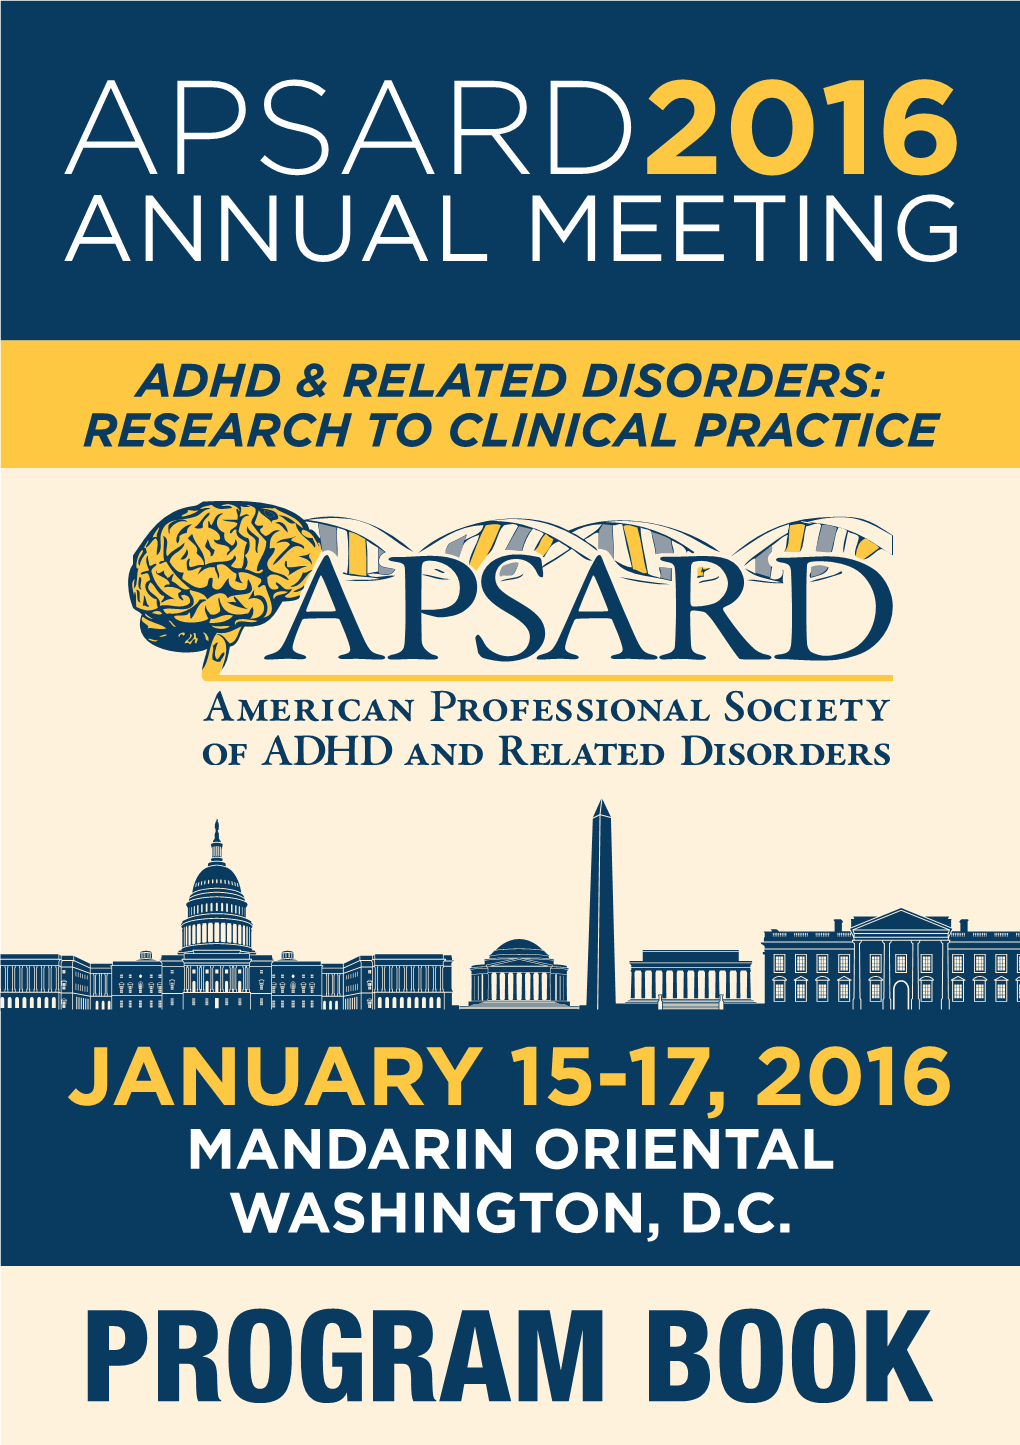 January 15-17, 2016 Mandarin Oriental Washington, D.C